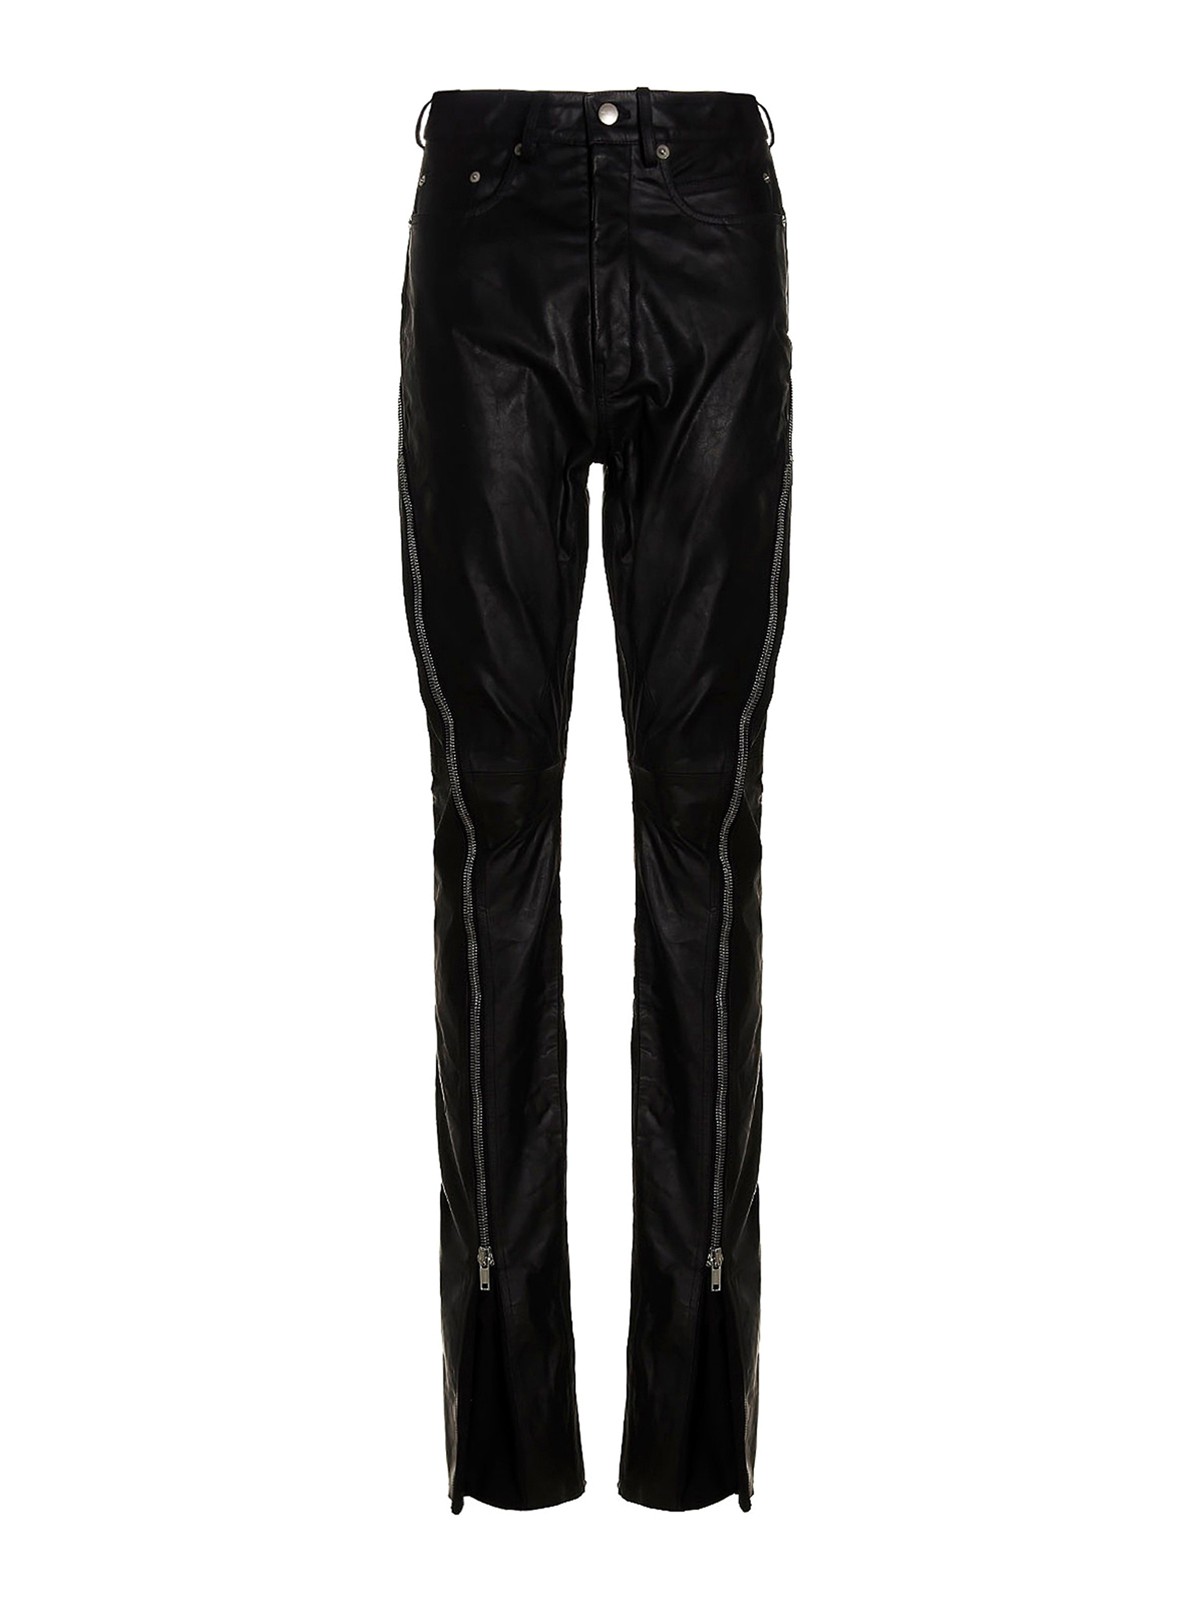 032c ZIP TROUSERS UNISEX  Leather trousers  black  Zalandocouk